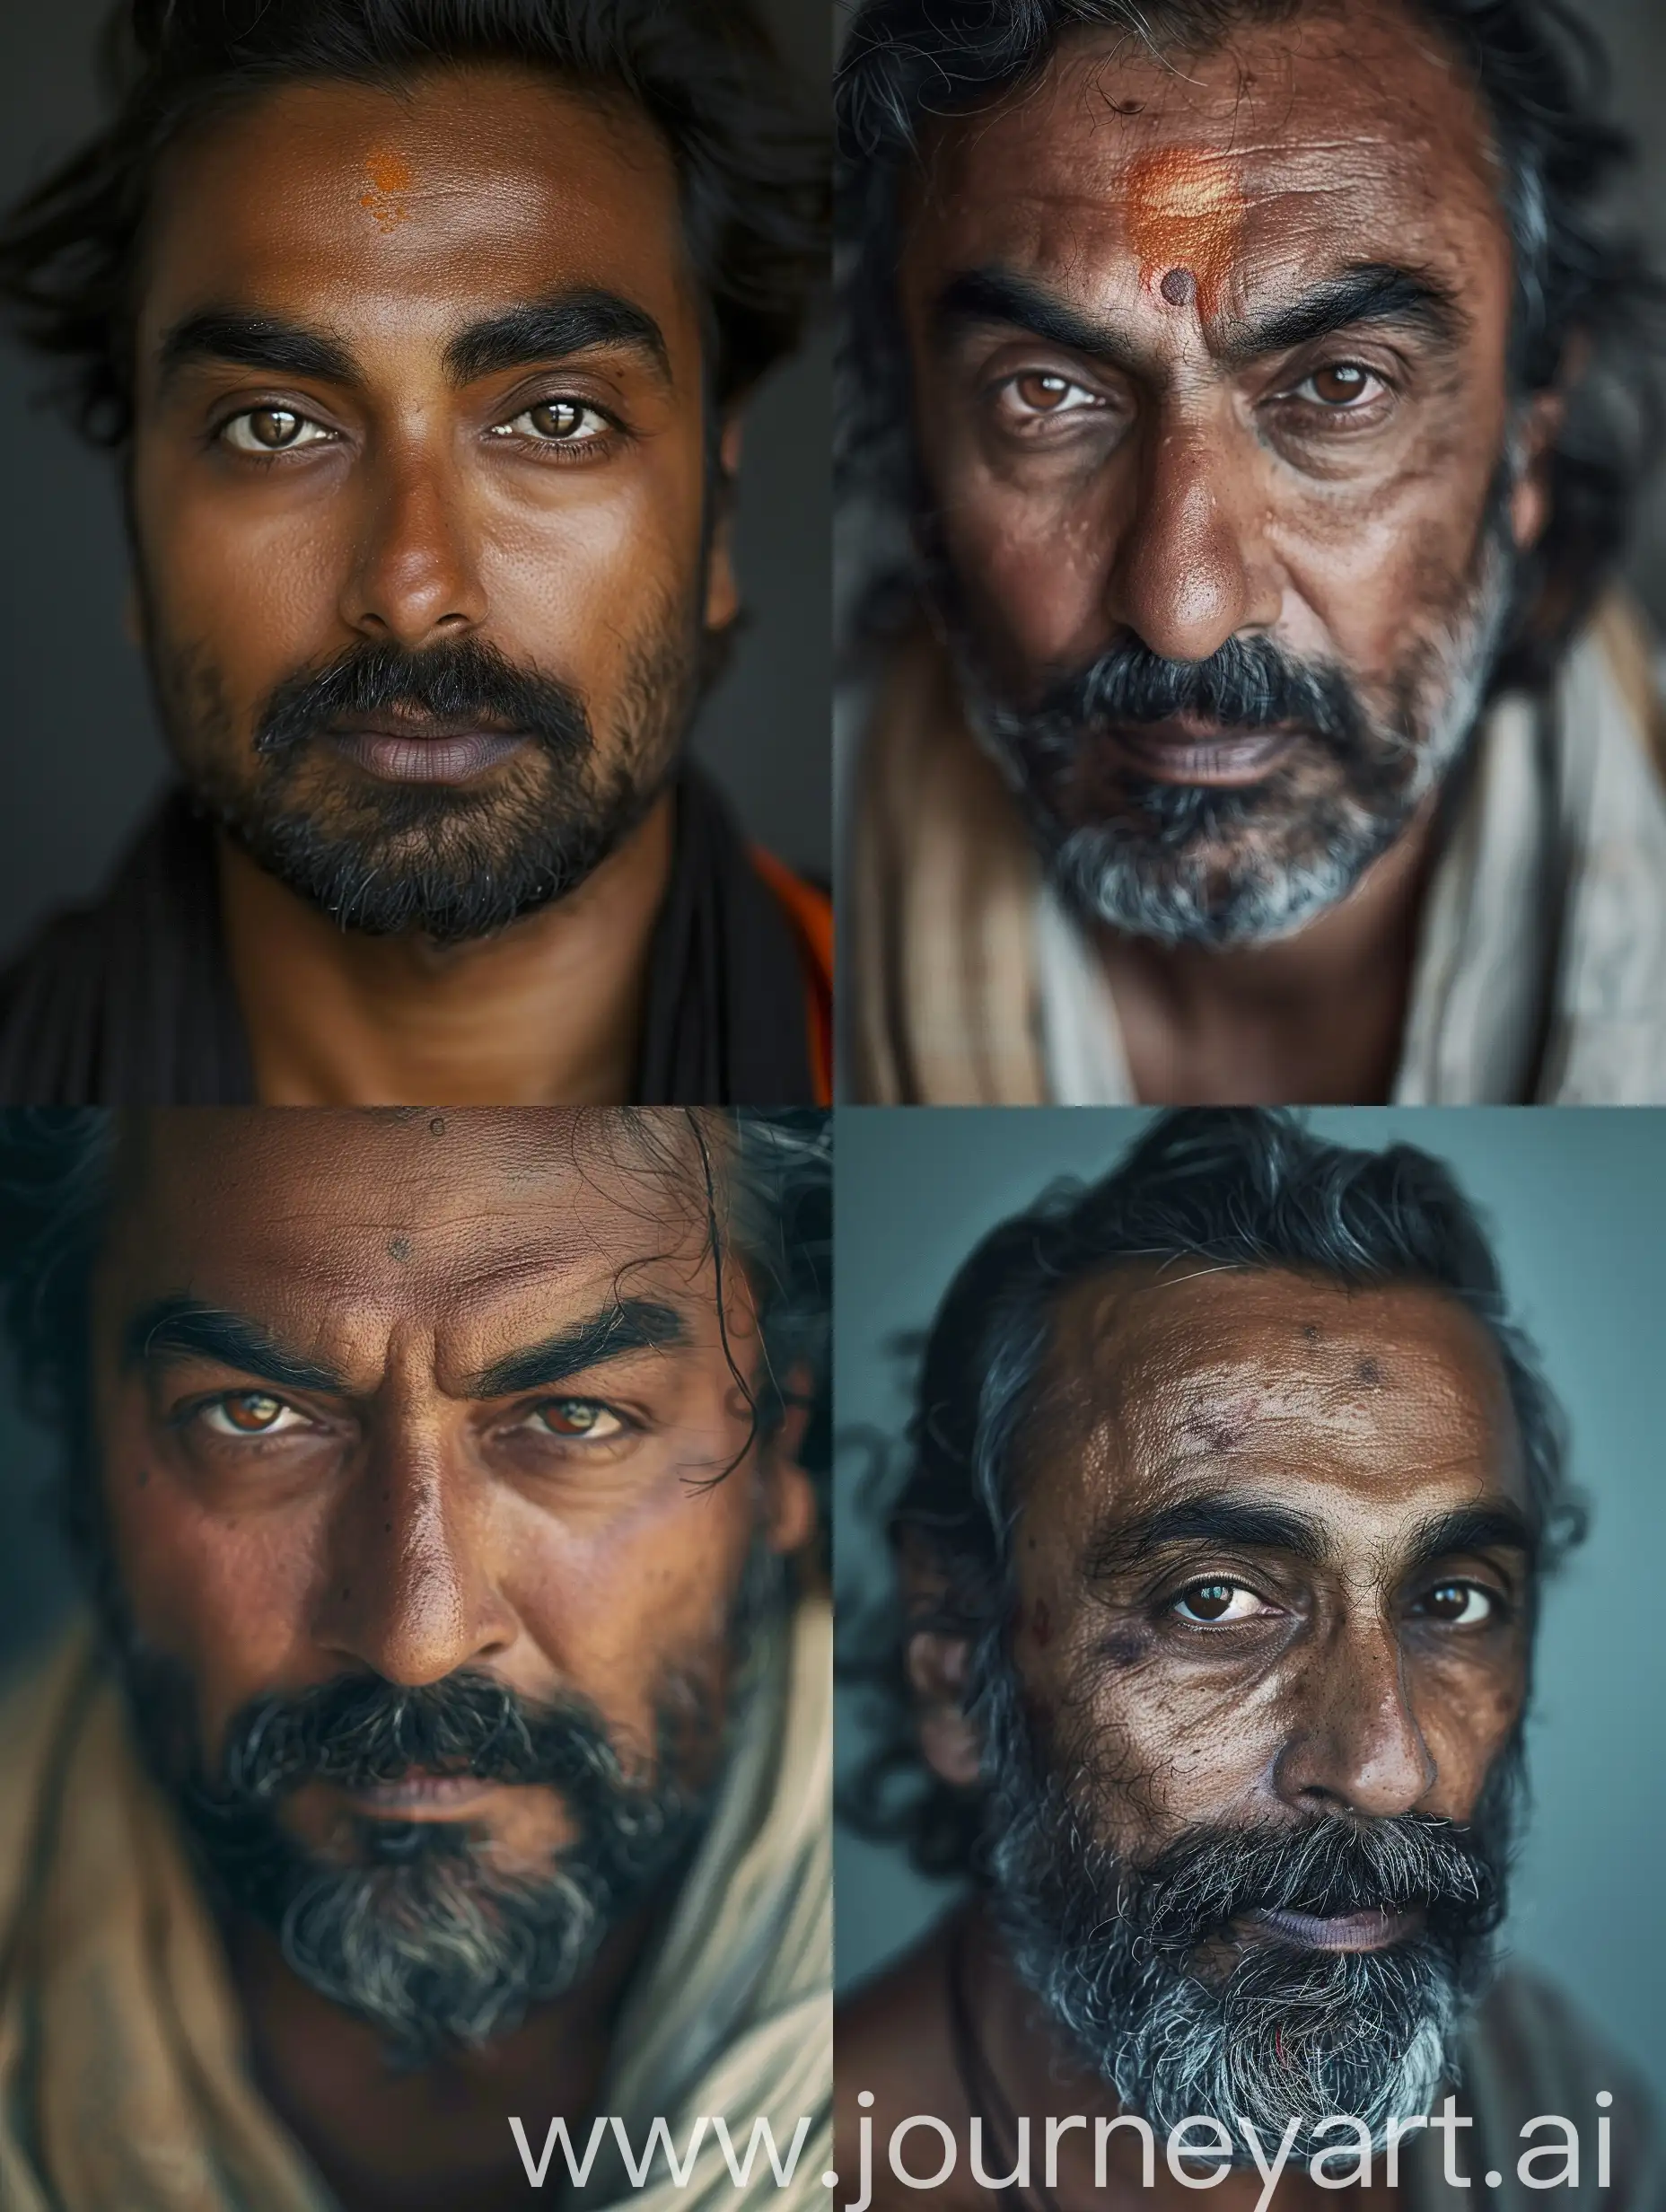 Martin Schoeller takes a close-up portrait of kabir bedi as sandokan --ar 9:12 --v 6.0 --style raw